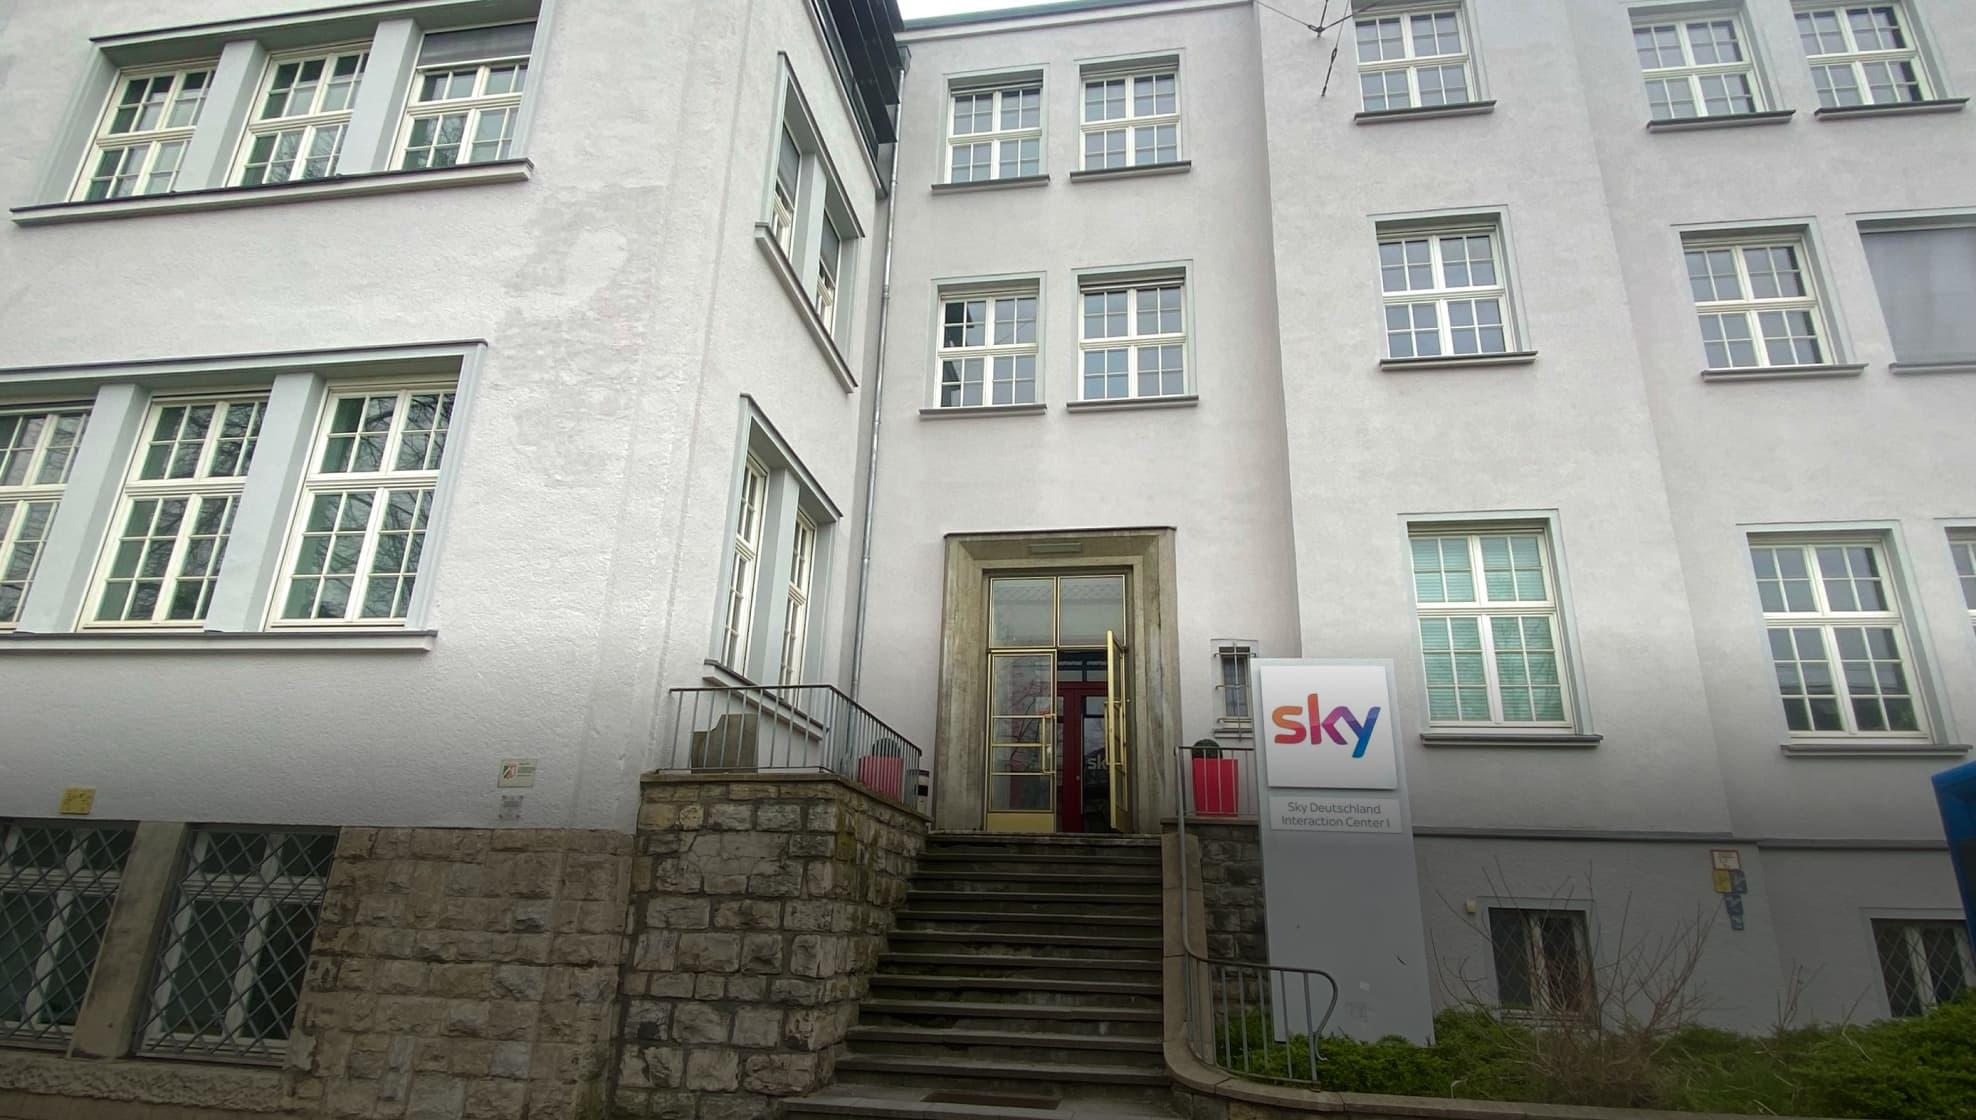 shot of the Sky office in Bielefeld, Germany